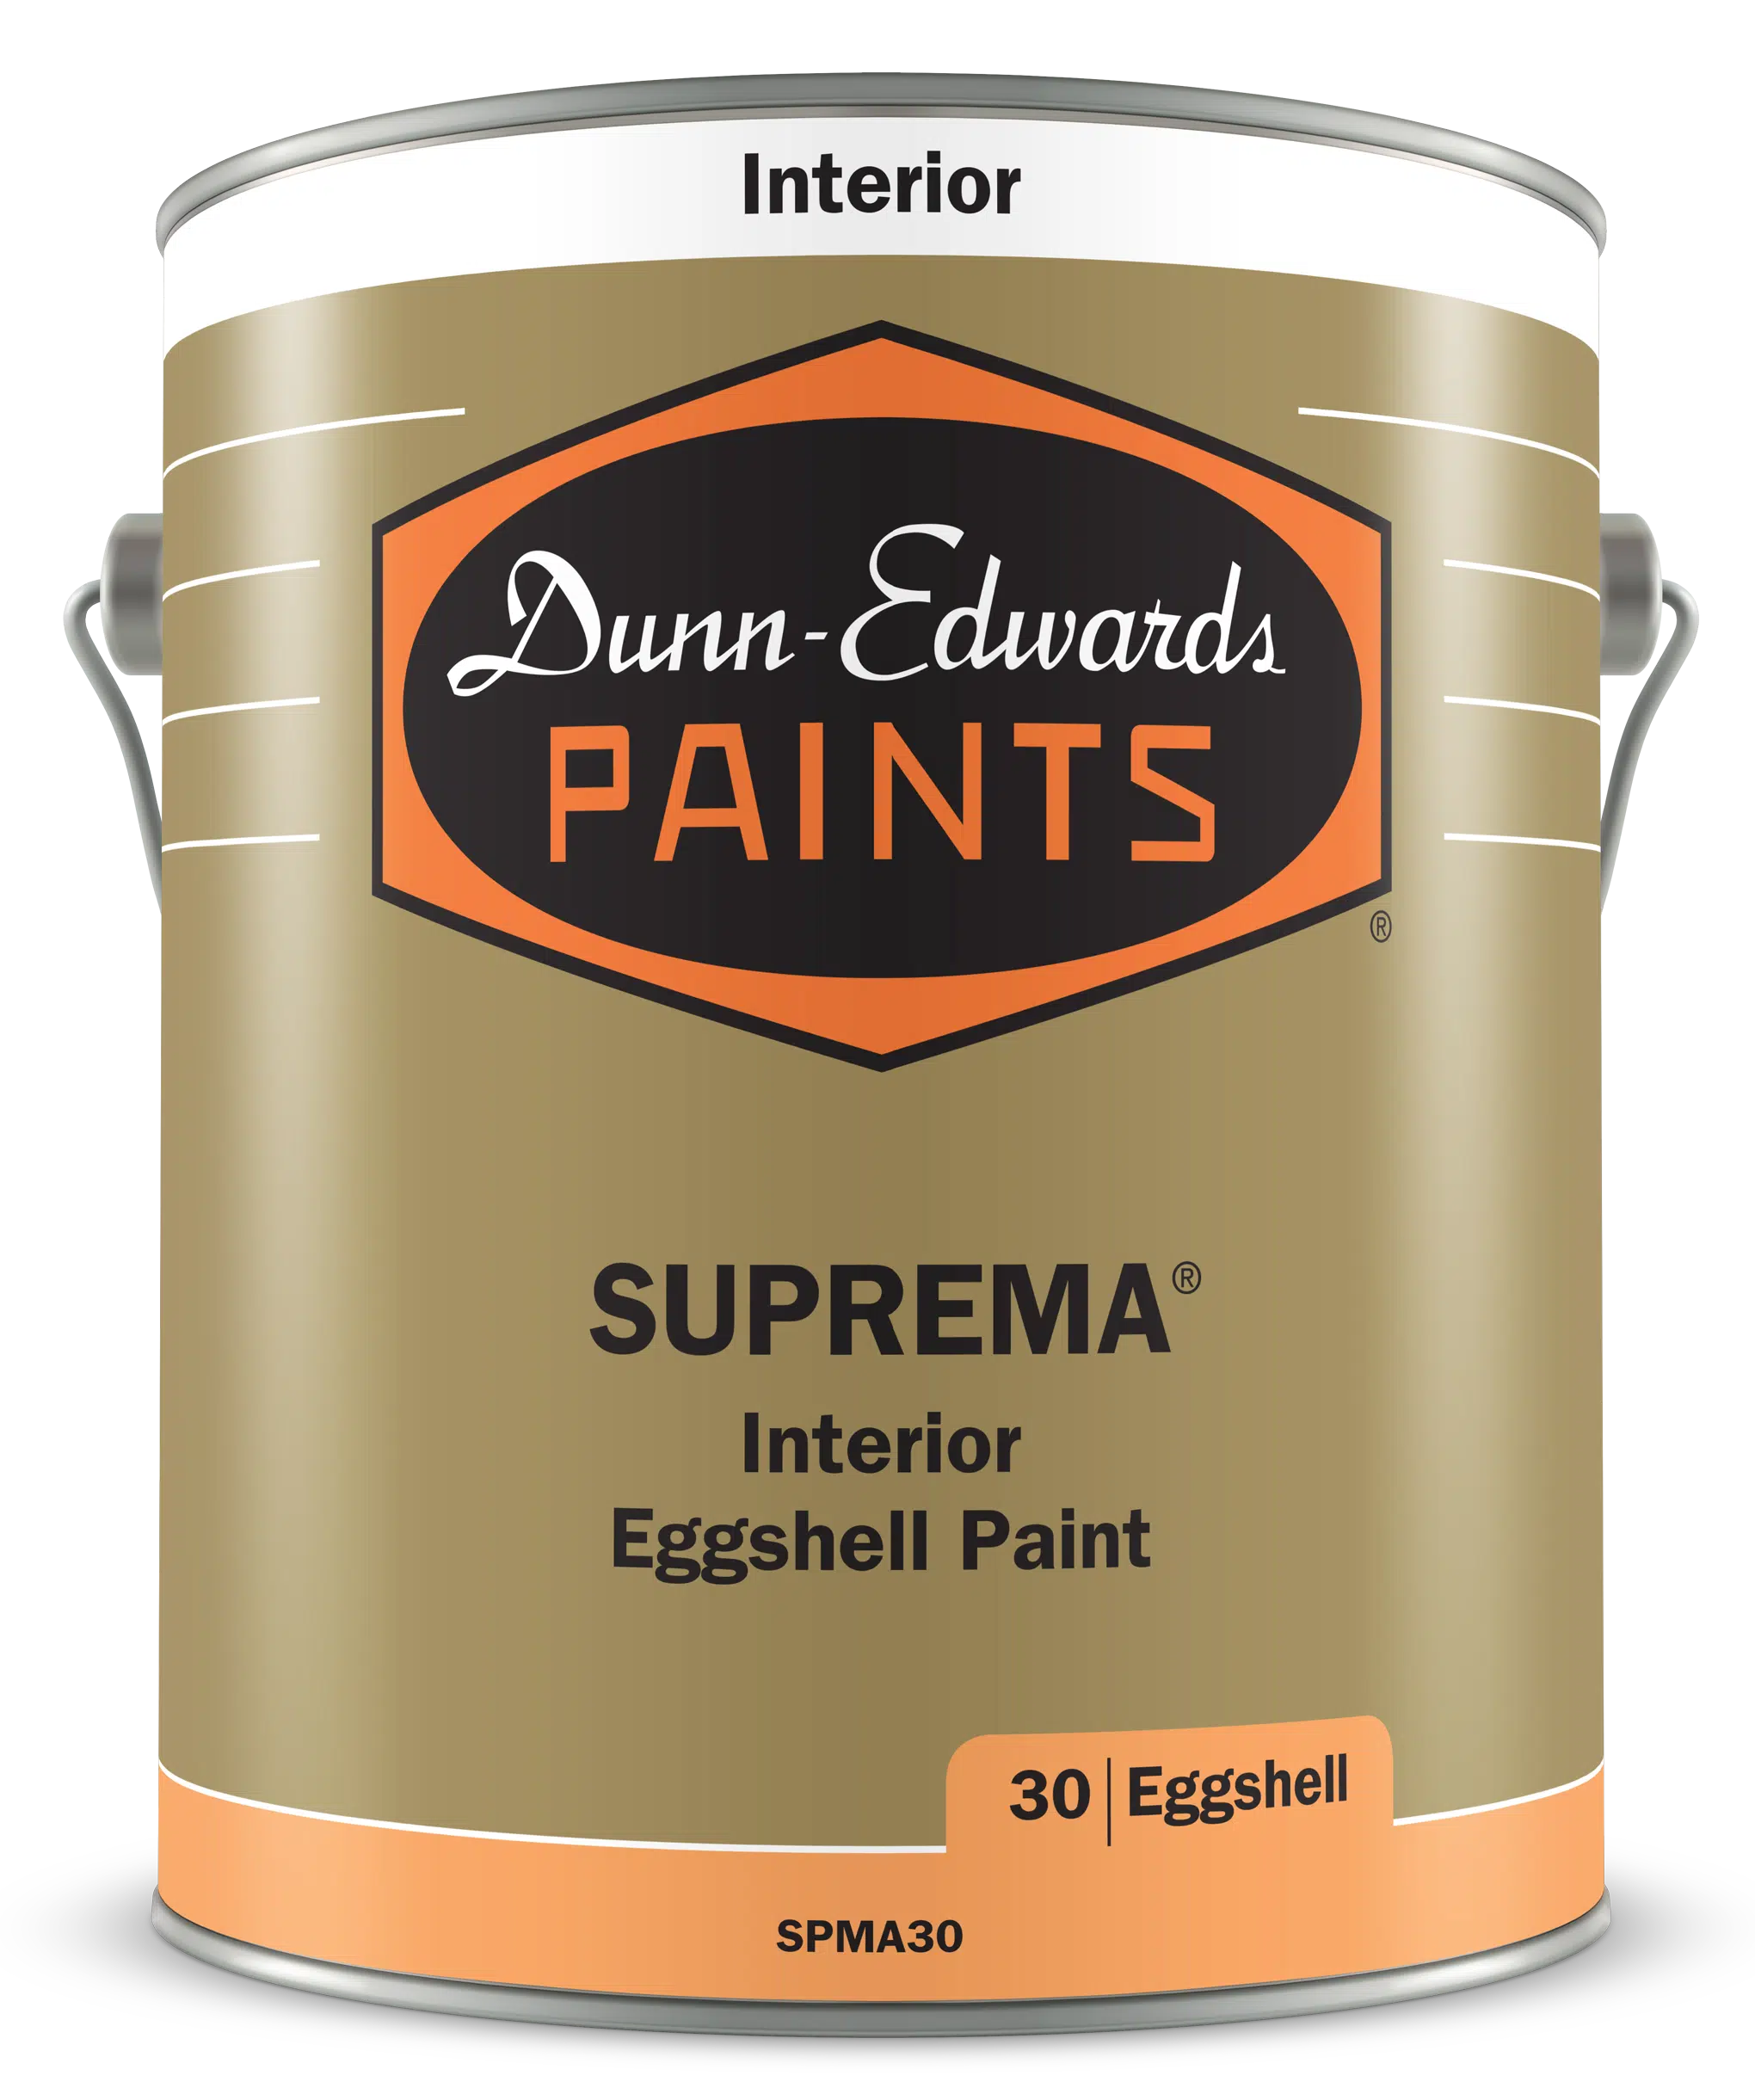 SUPREMA Interior Eggshell Paint Can